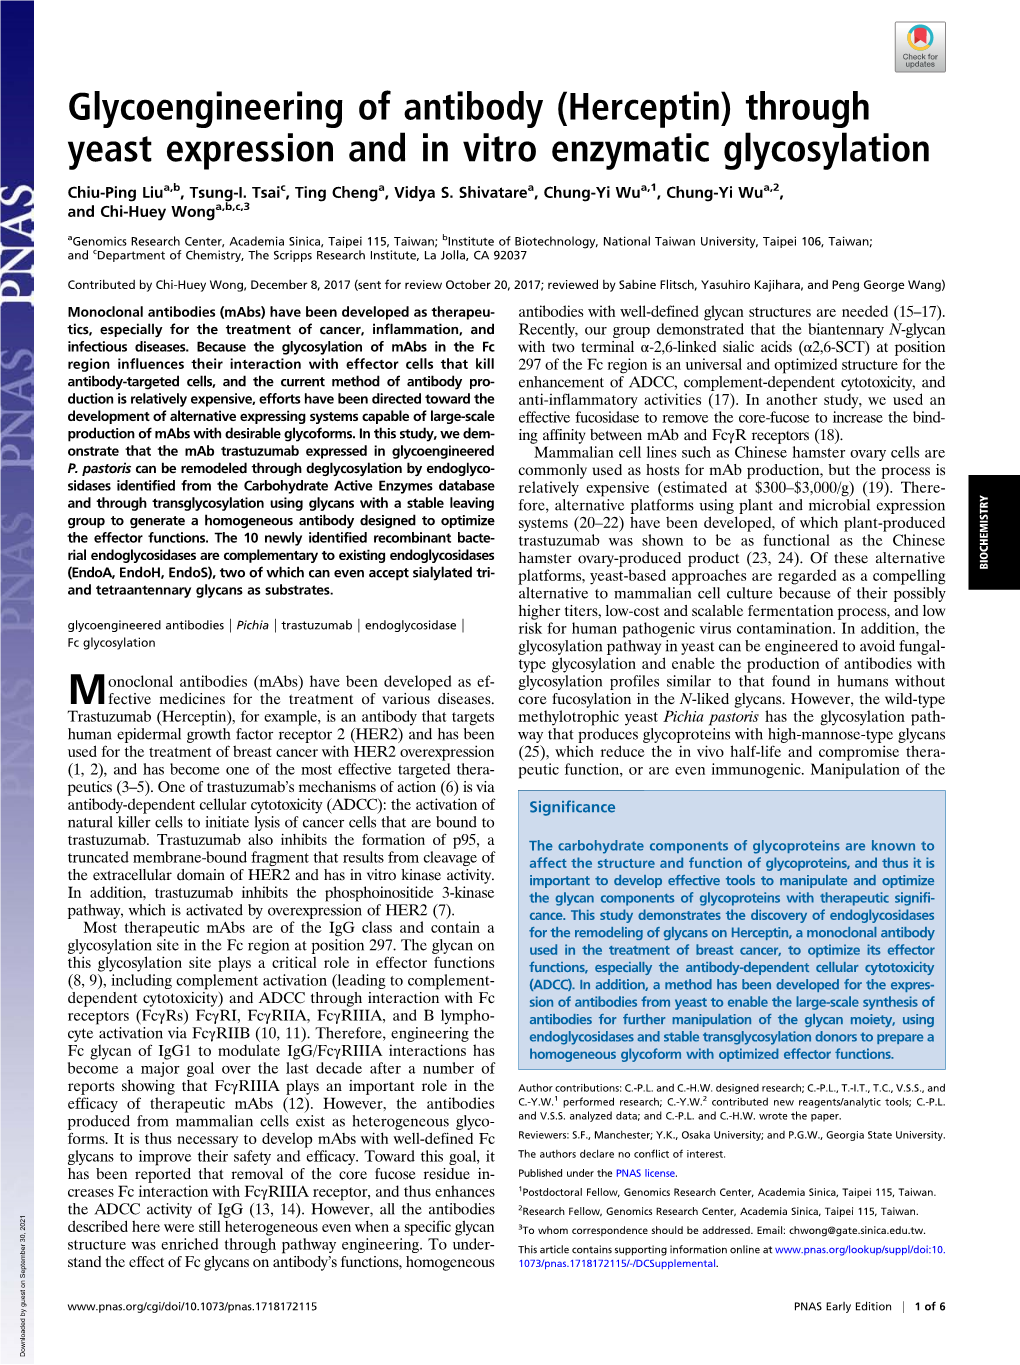 Glycoengineering of Antibody (Herceptin) Through Yeast Expression and in Vitro Enzymatic Glycosylation